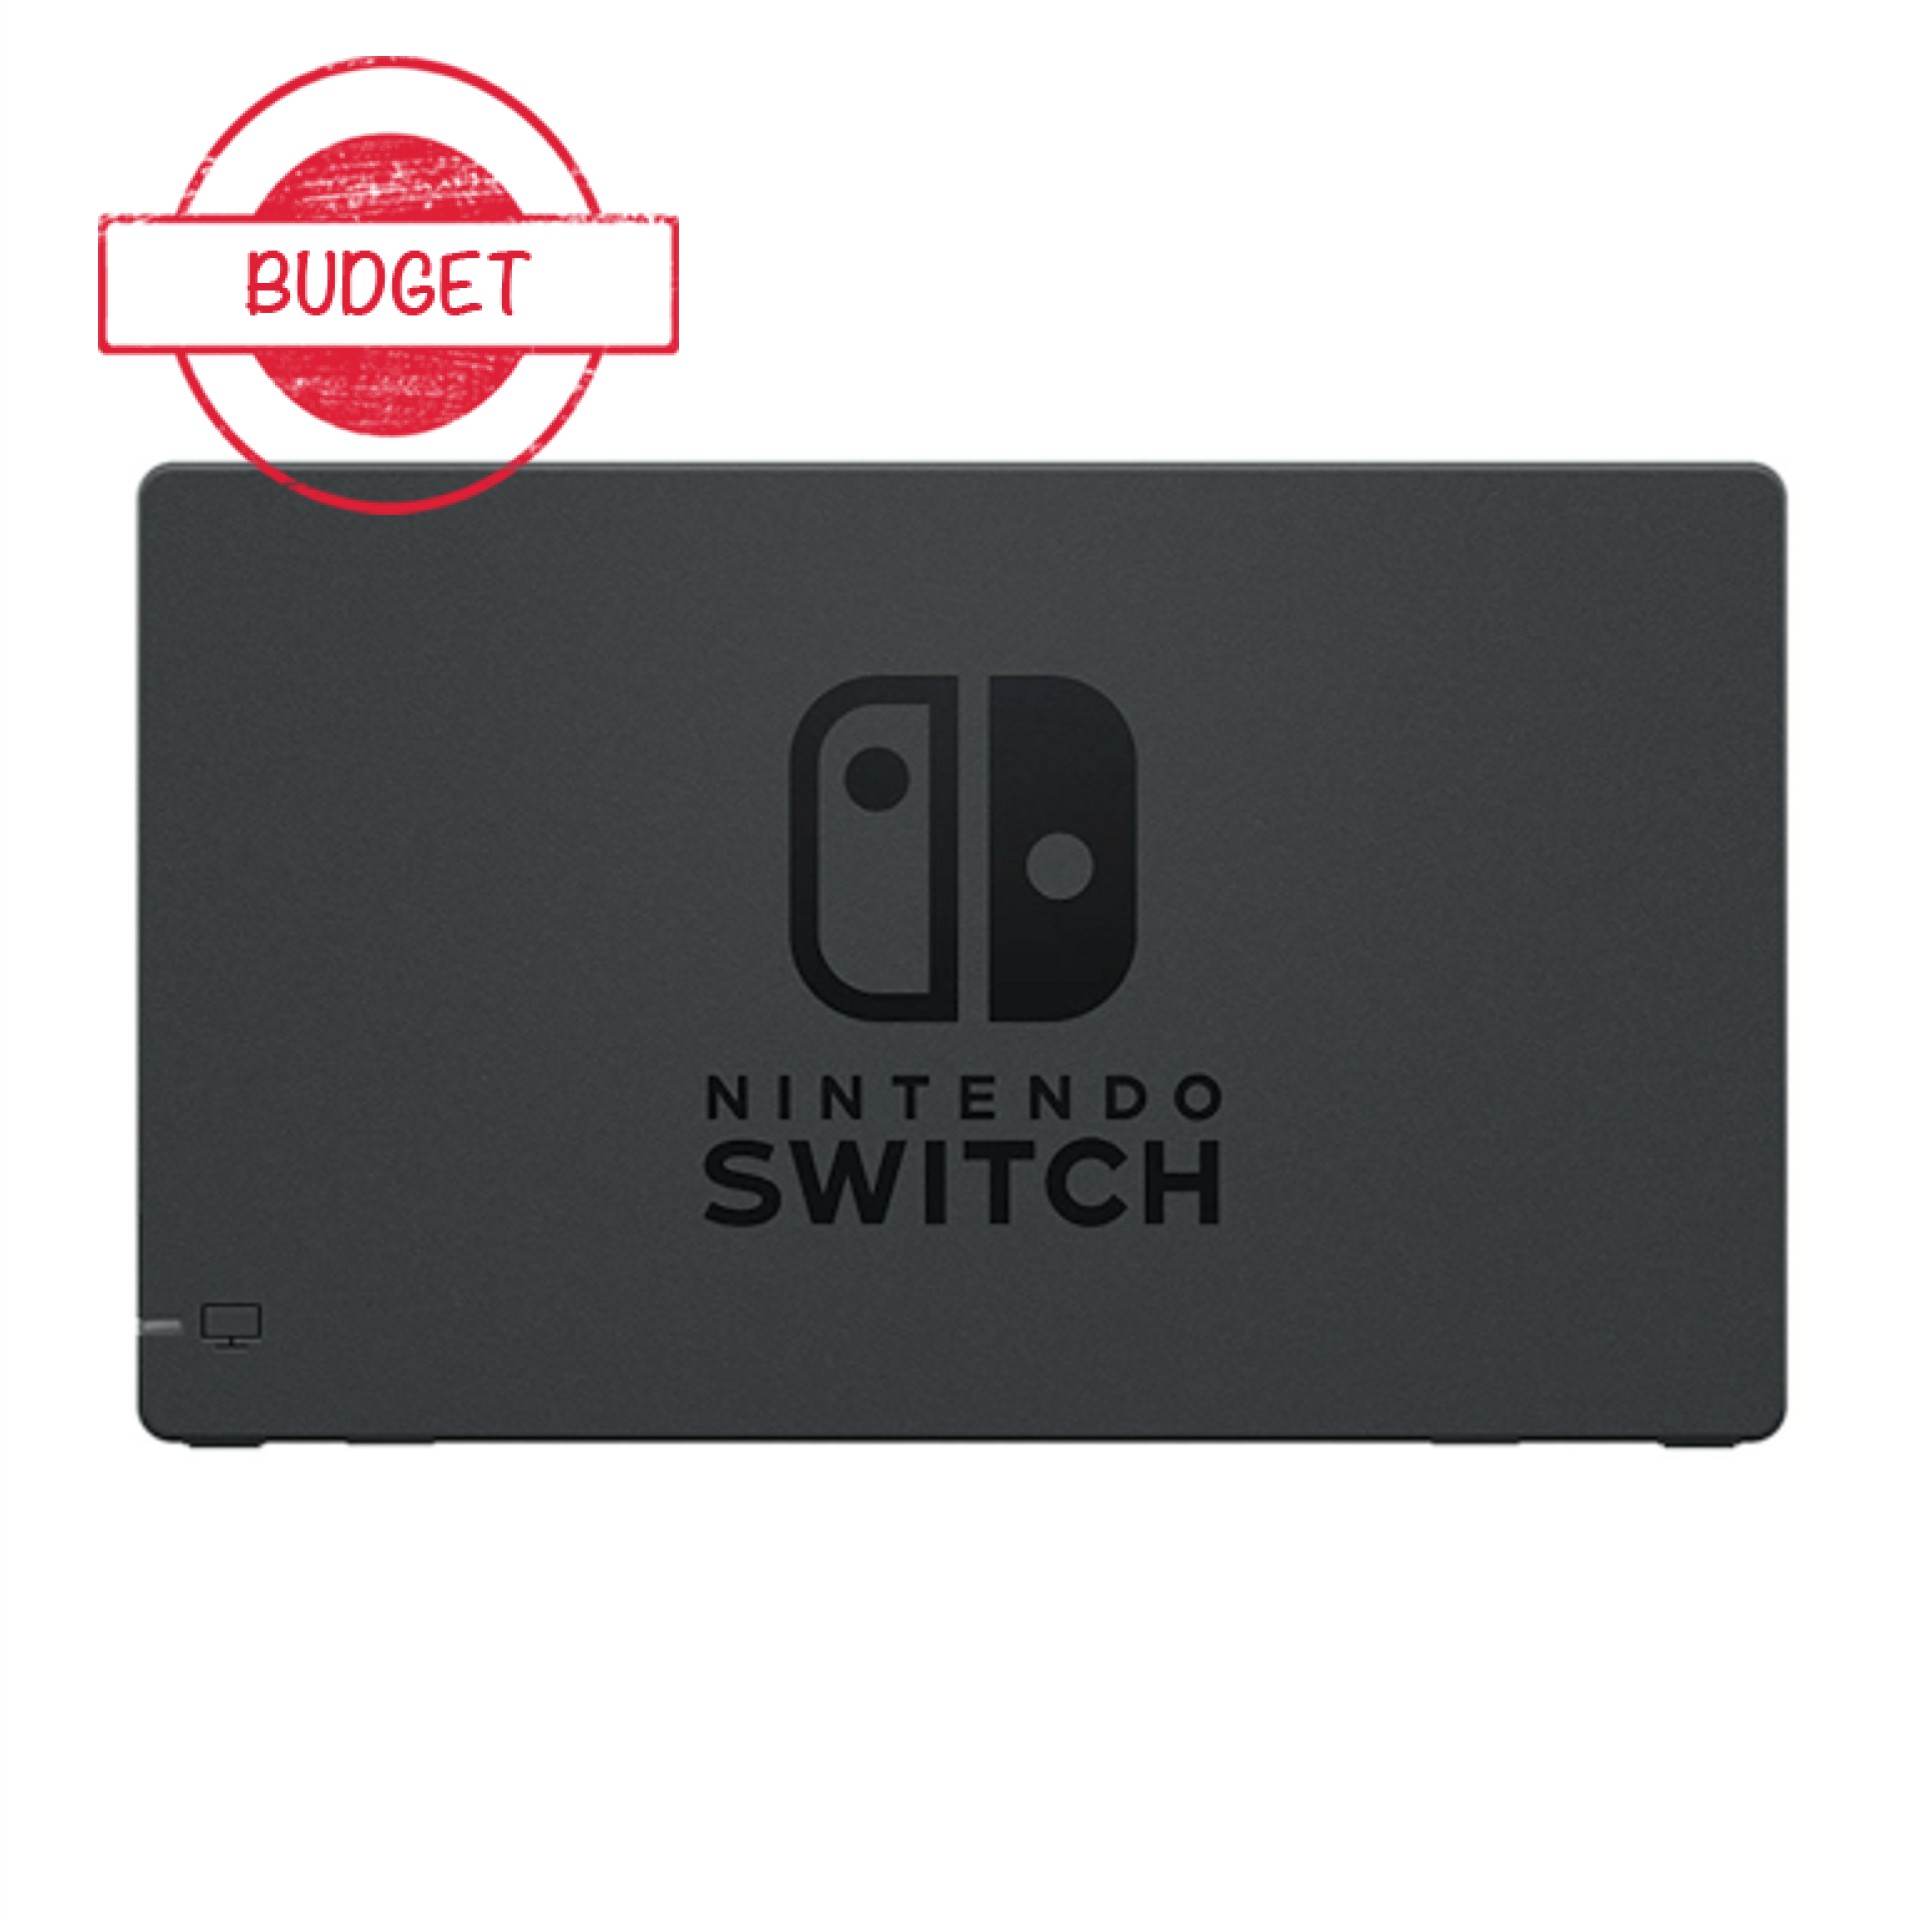 Nintendo Switch Dock (Los) - Budget - Nintendo Switch Hardware